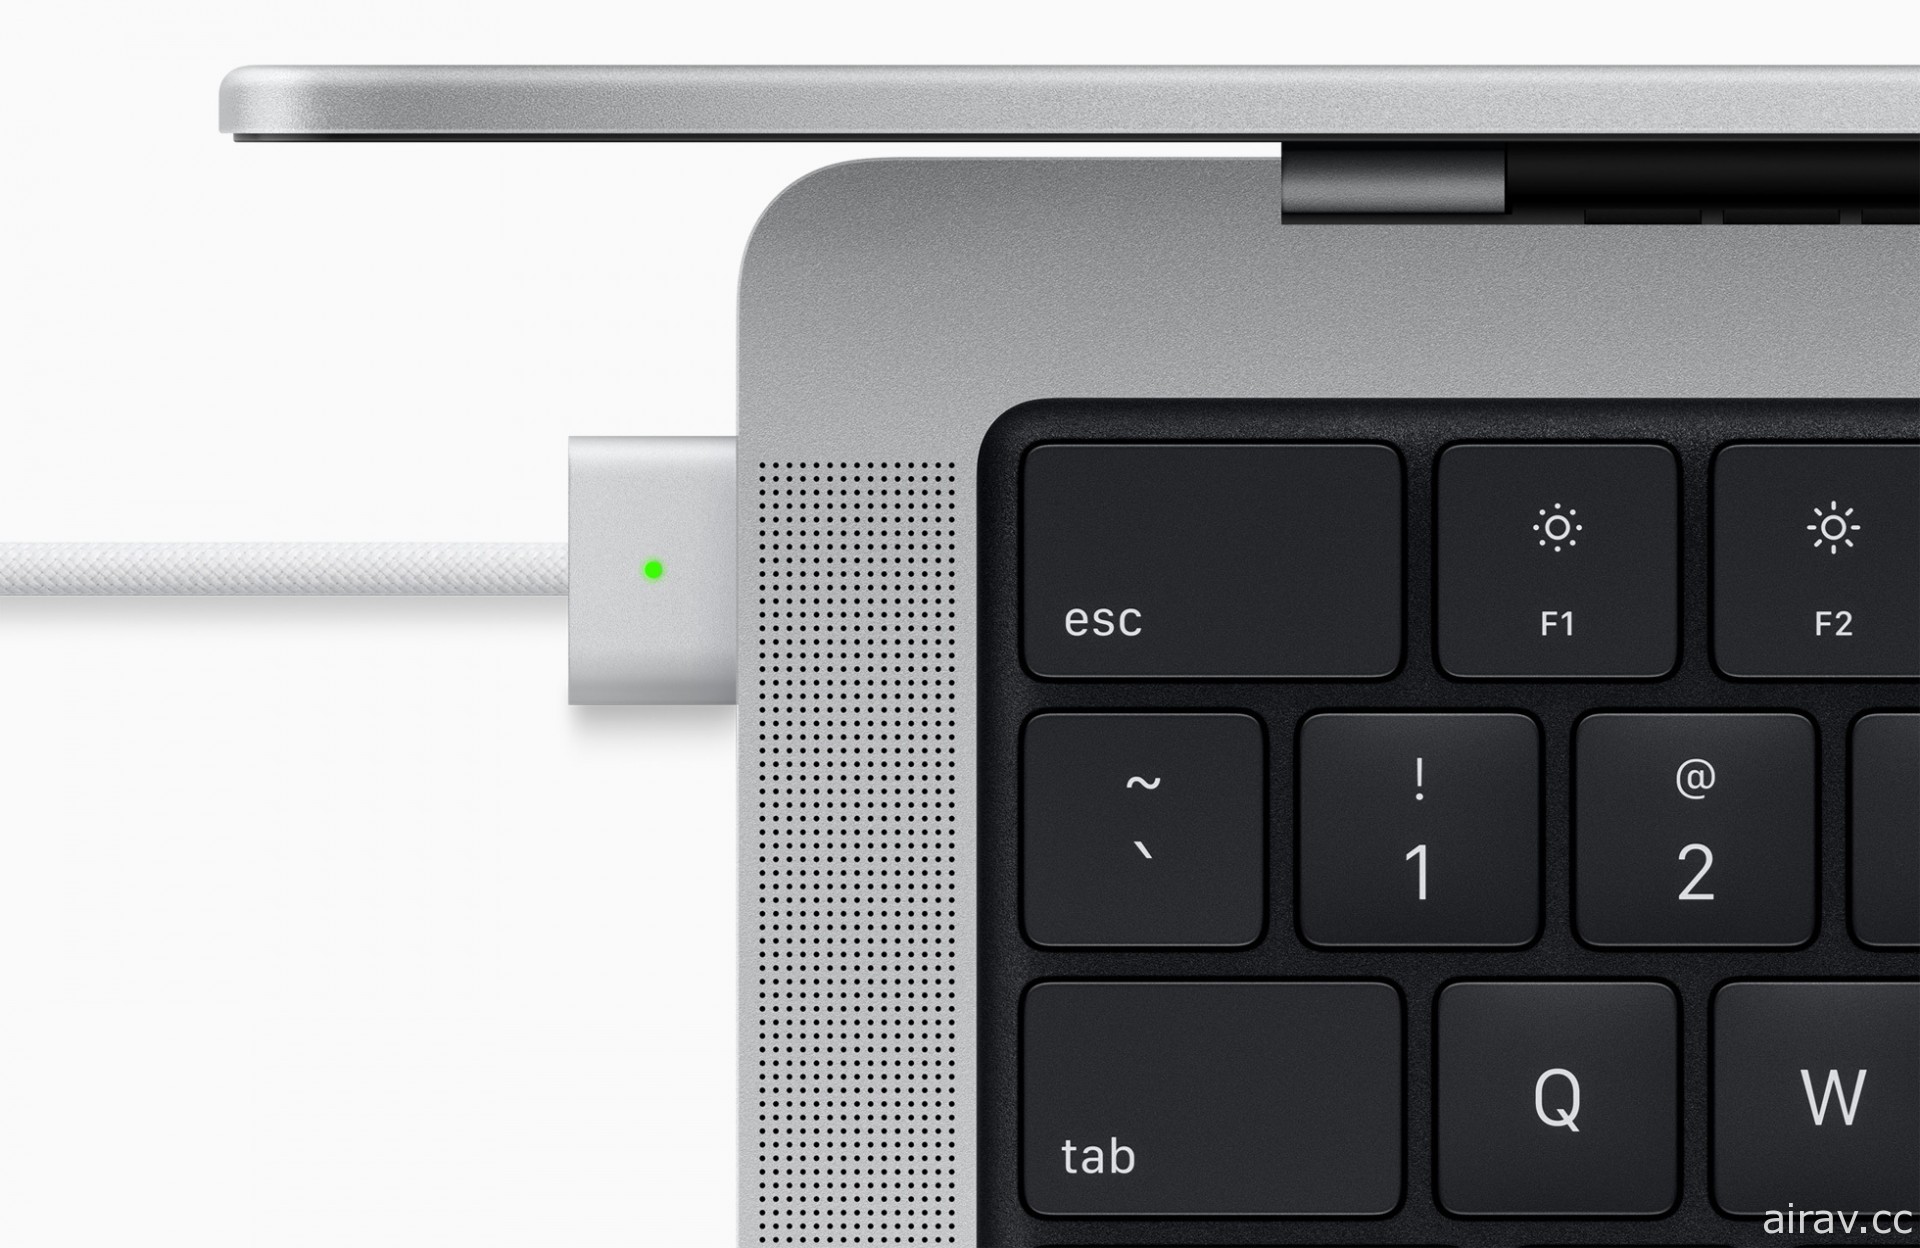 新款 MacBook Pro 搭载 M1 Pro 和 M1 Max 芯片 配备 Liquid Retina XDR 显示器